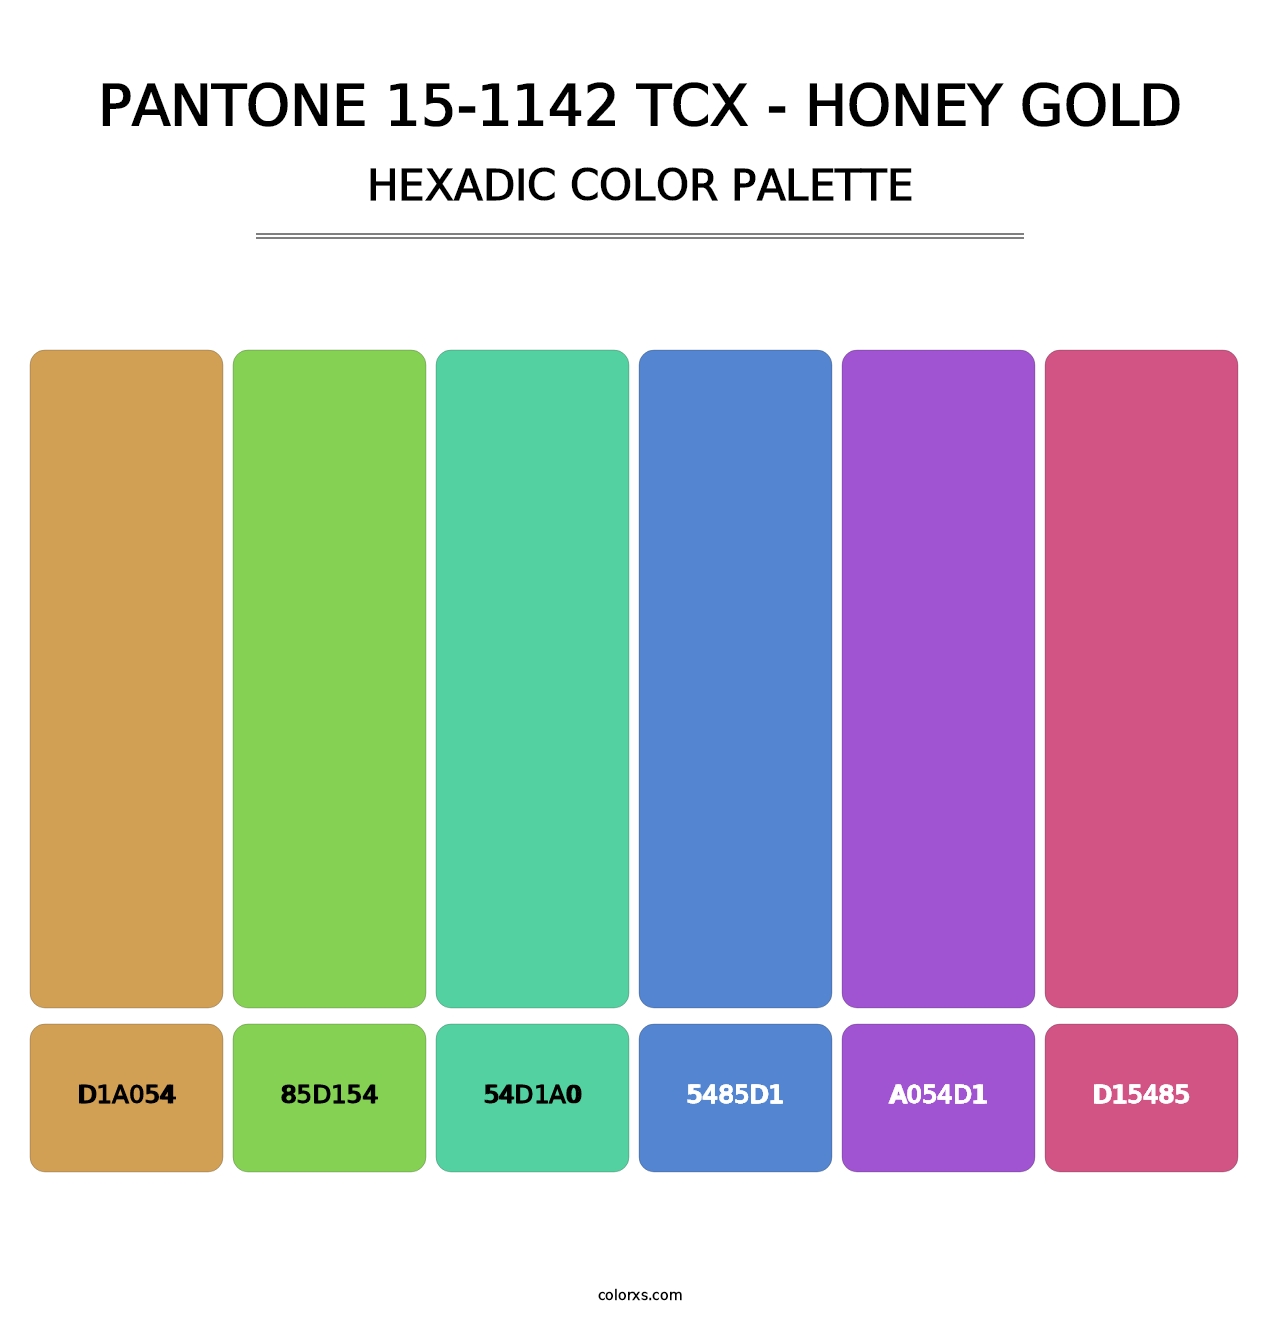 PANTONE 15-1142 TCX - Honey Gold - Hexadic Color Palette